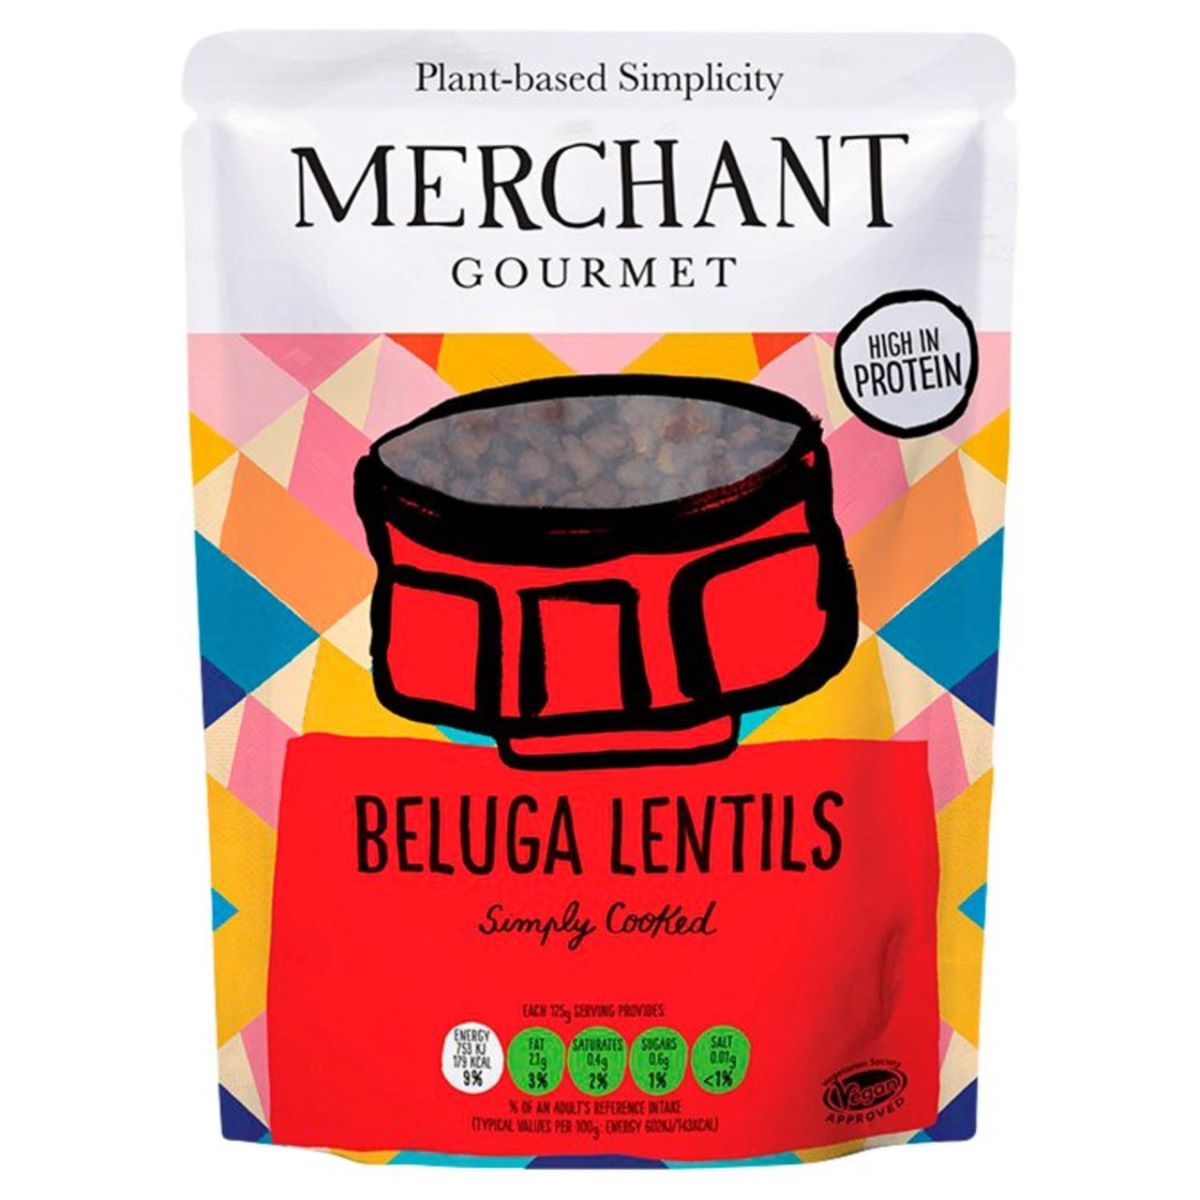 Merchant Gourmet Beluga Lentils 250g